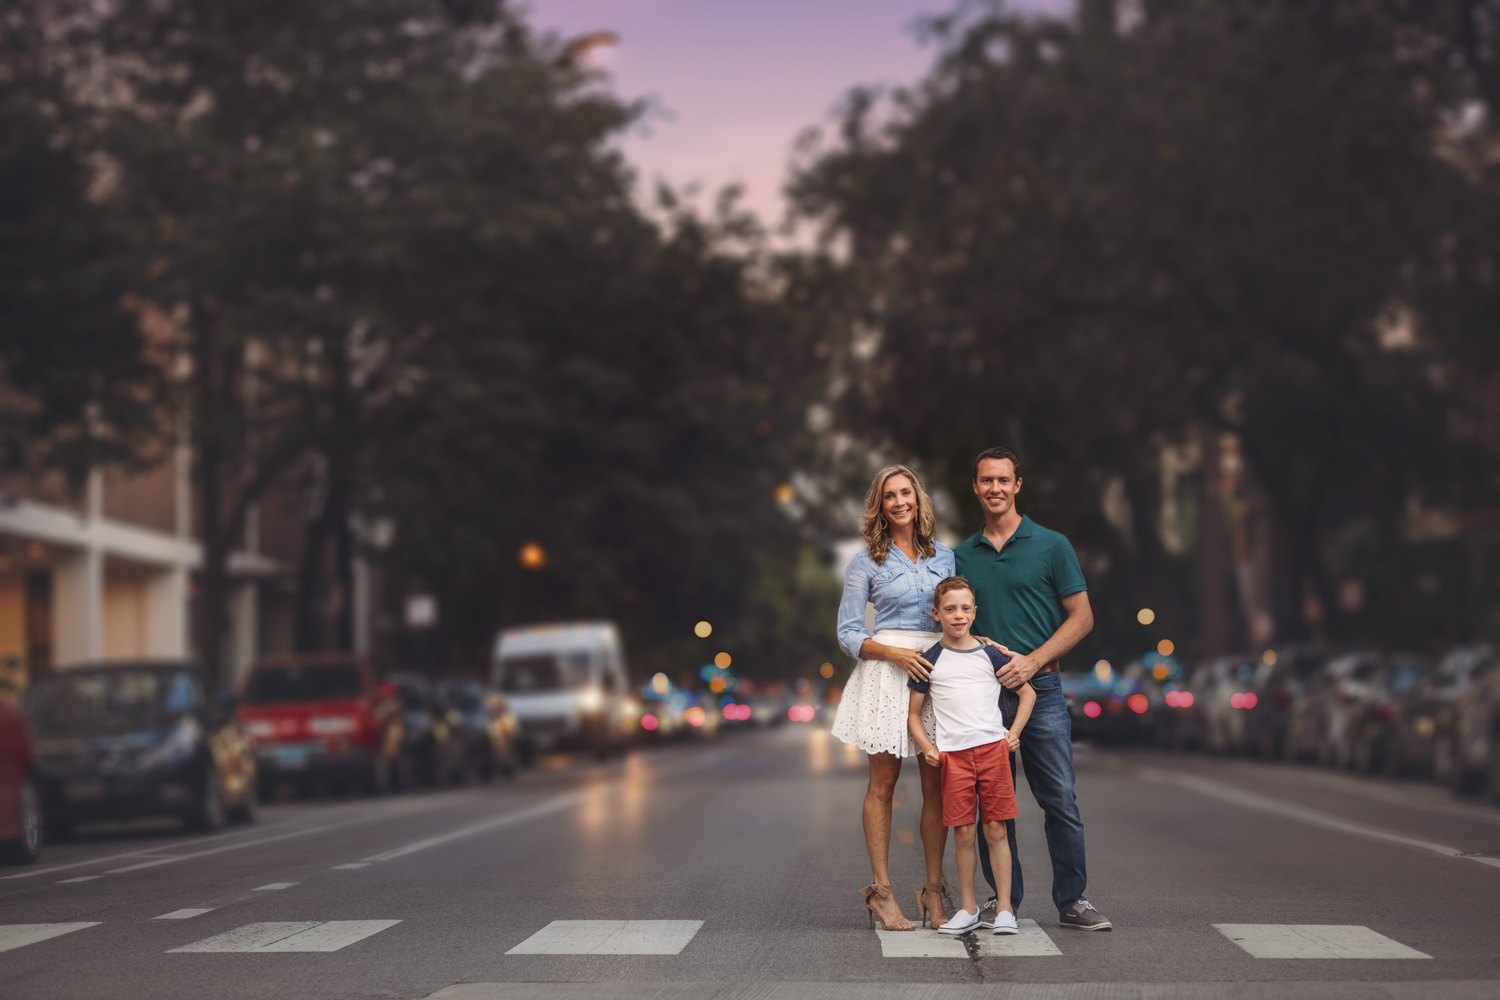 Chicago family photograph in crosswalk on city street